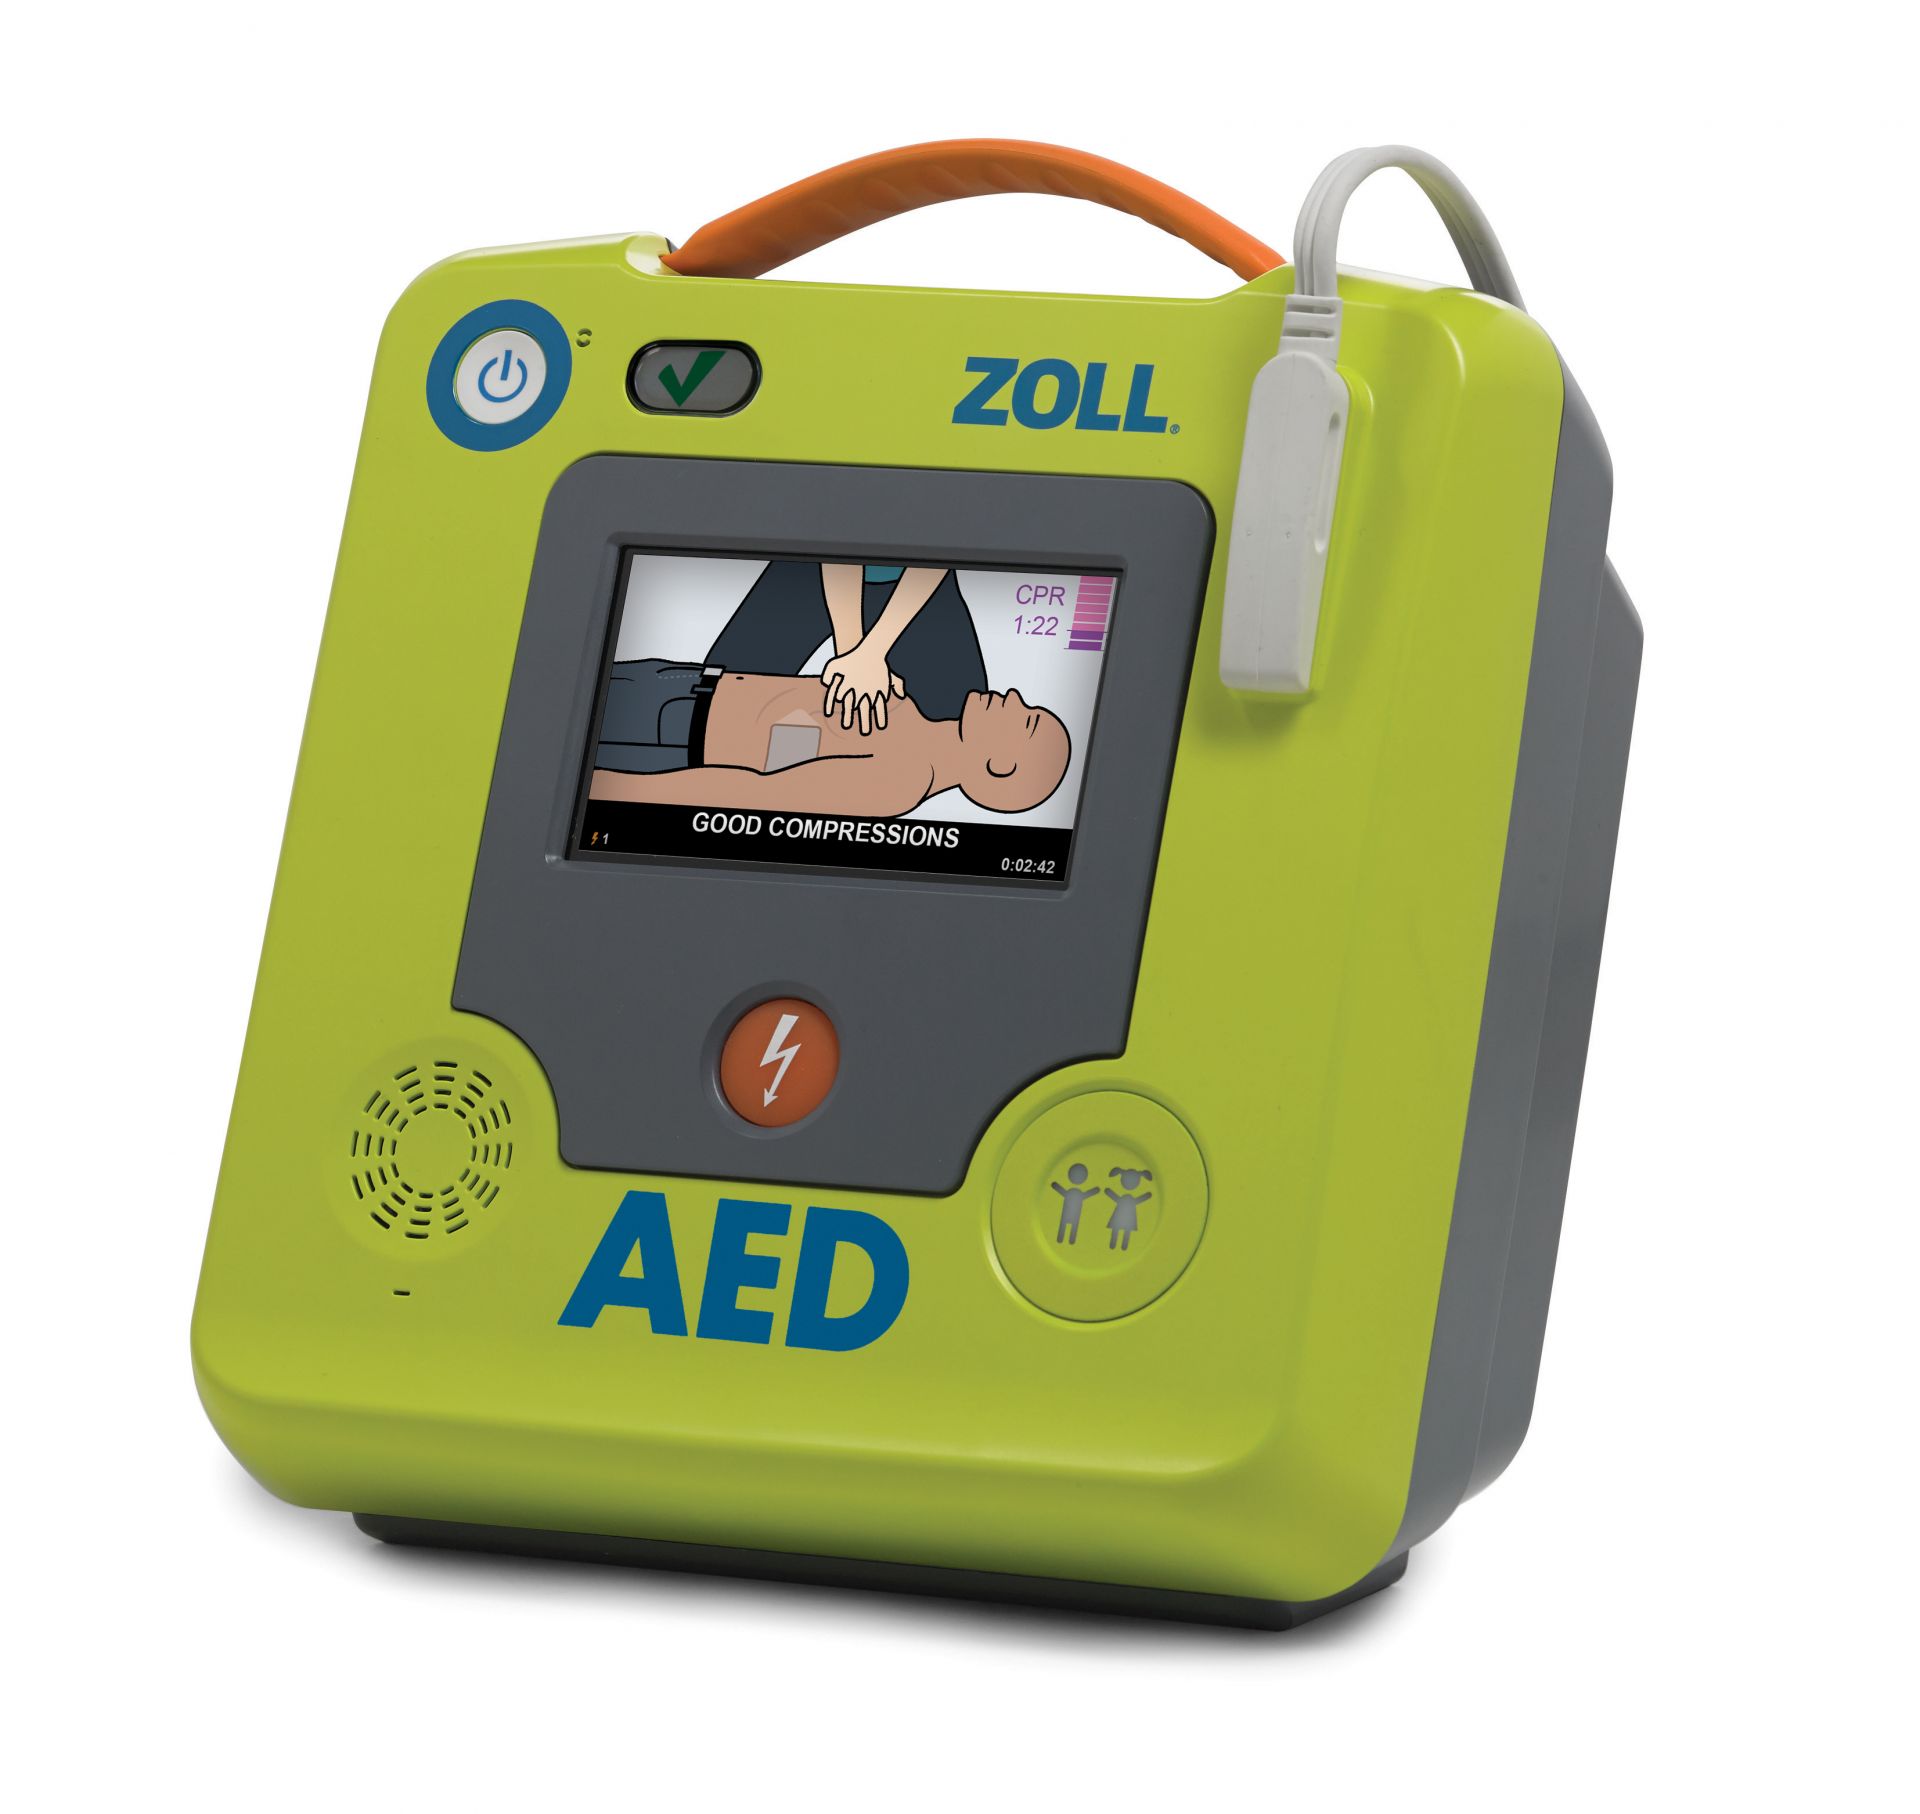 Défibrillateur aed3 zoll medical - version semi automatique_0